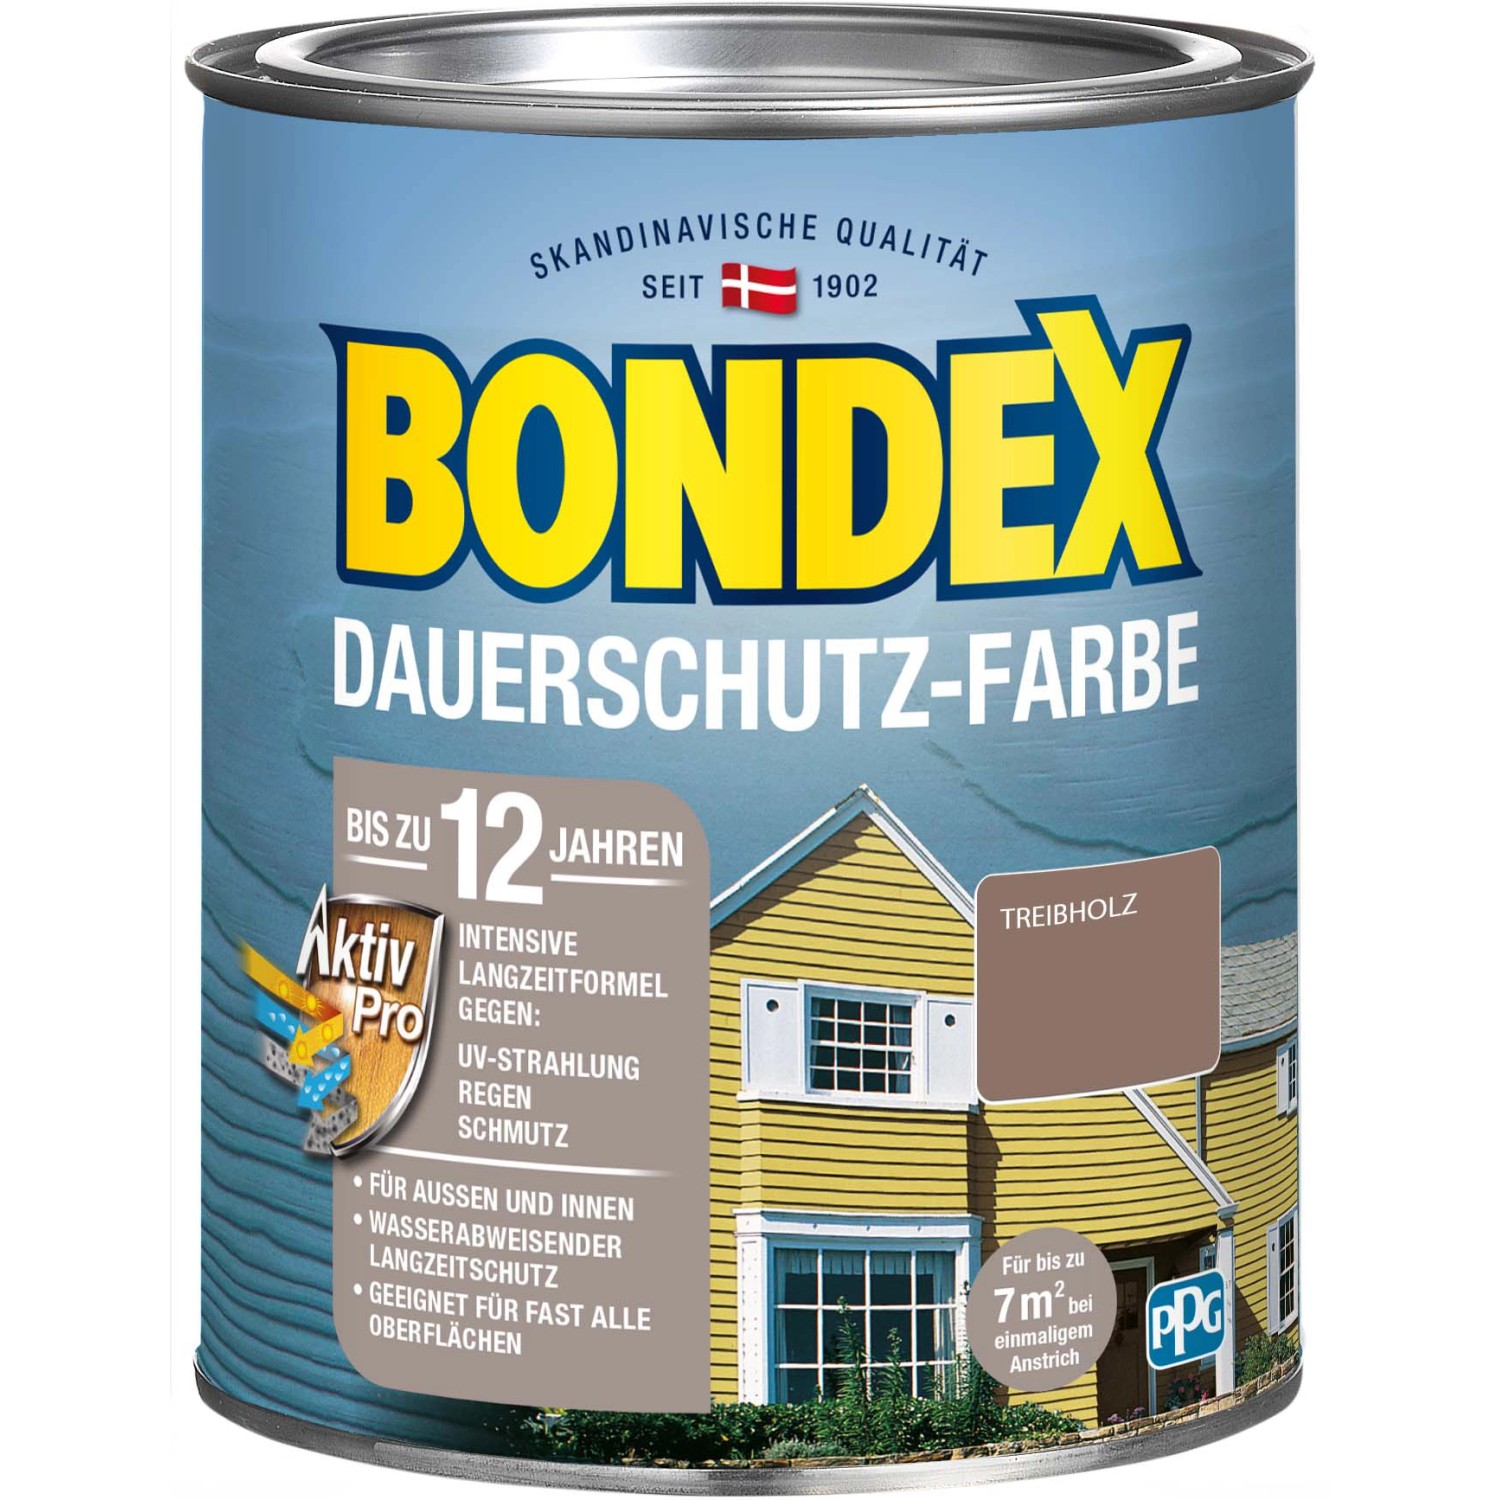 Bondex Dauerschutz-Farbe Treibholz Seidenglänzend 750 ml